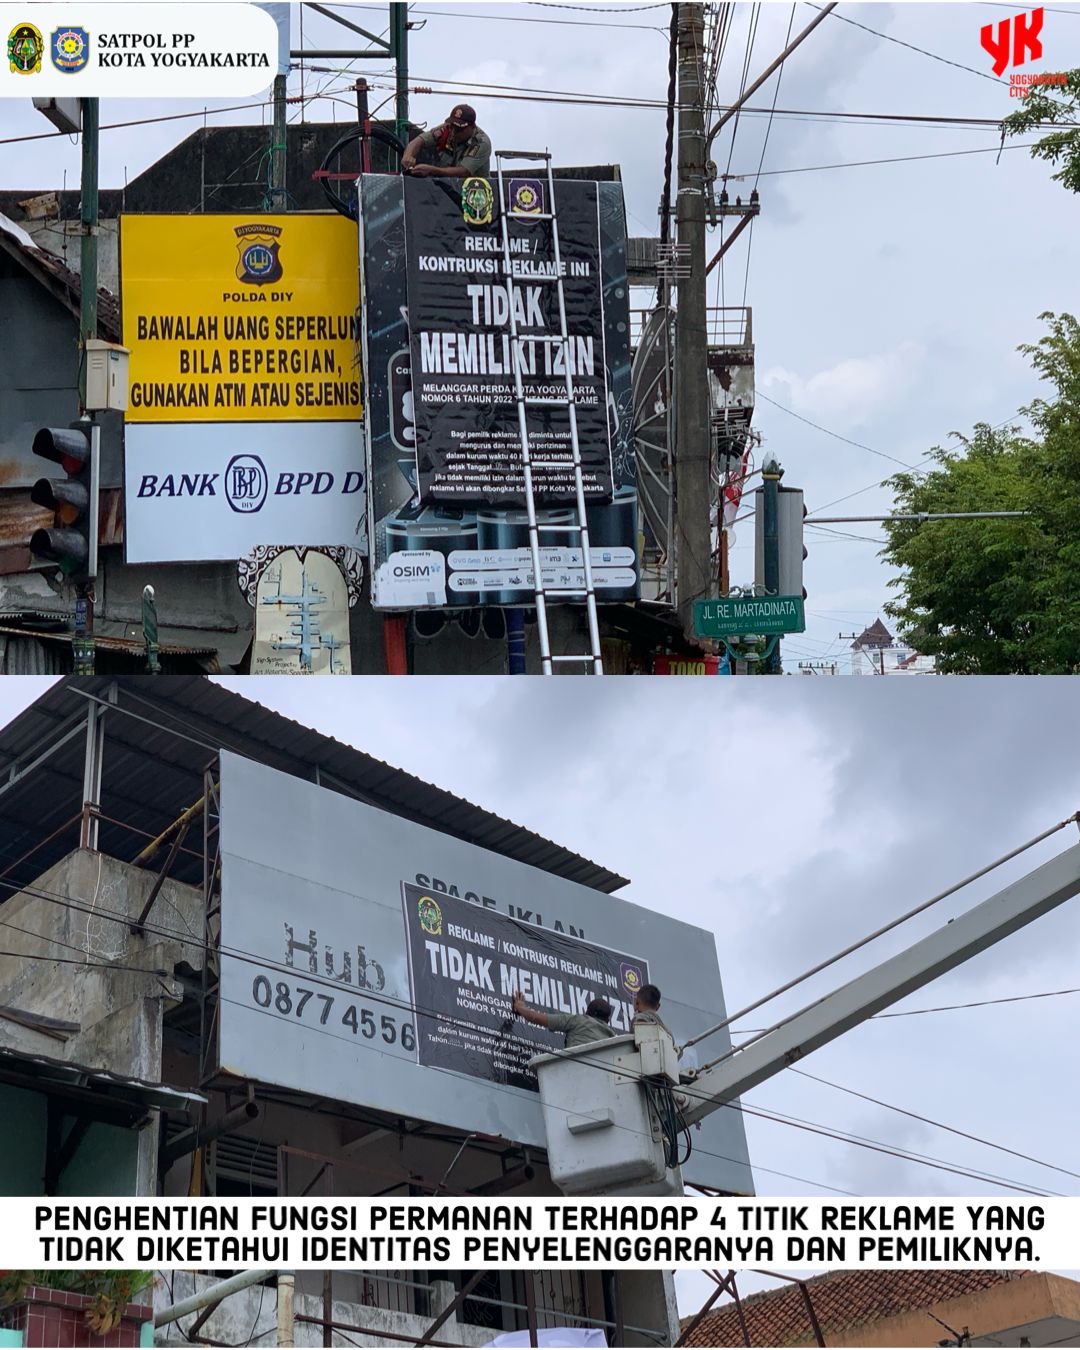 Satpol PP Kota Yogyakarta Berhentikan Fungsi 4 Reklame Yang Tidak Diketahui Identitas Penyelenggaranya